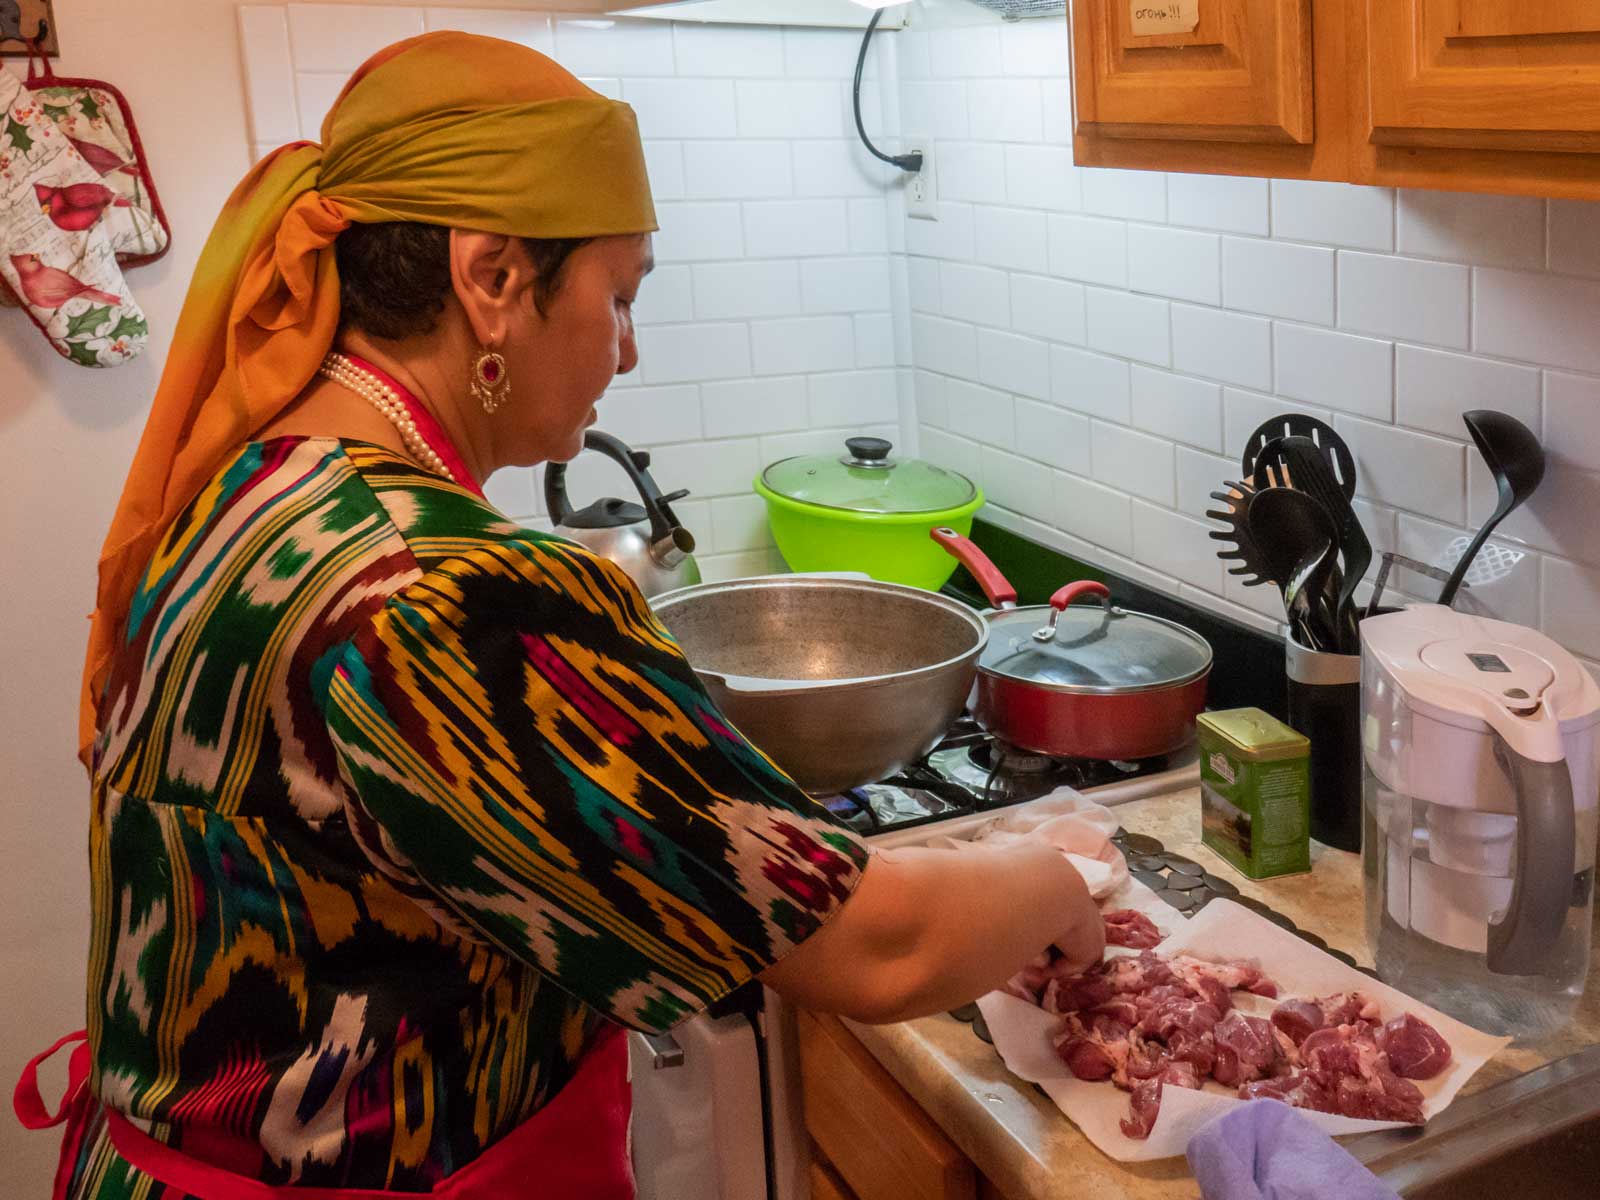 Damira Uzbek Cooking League of Kitchens by Brian Cicioni